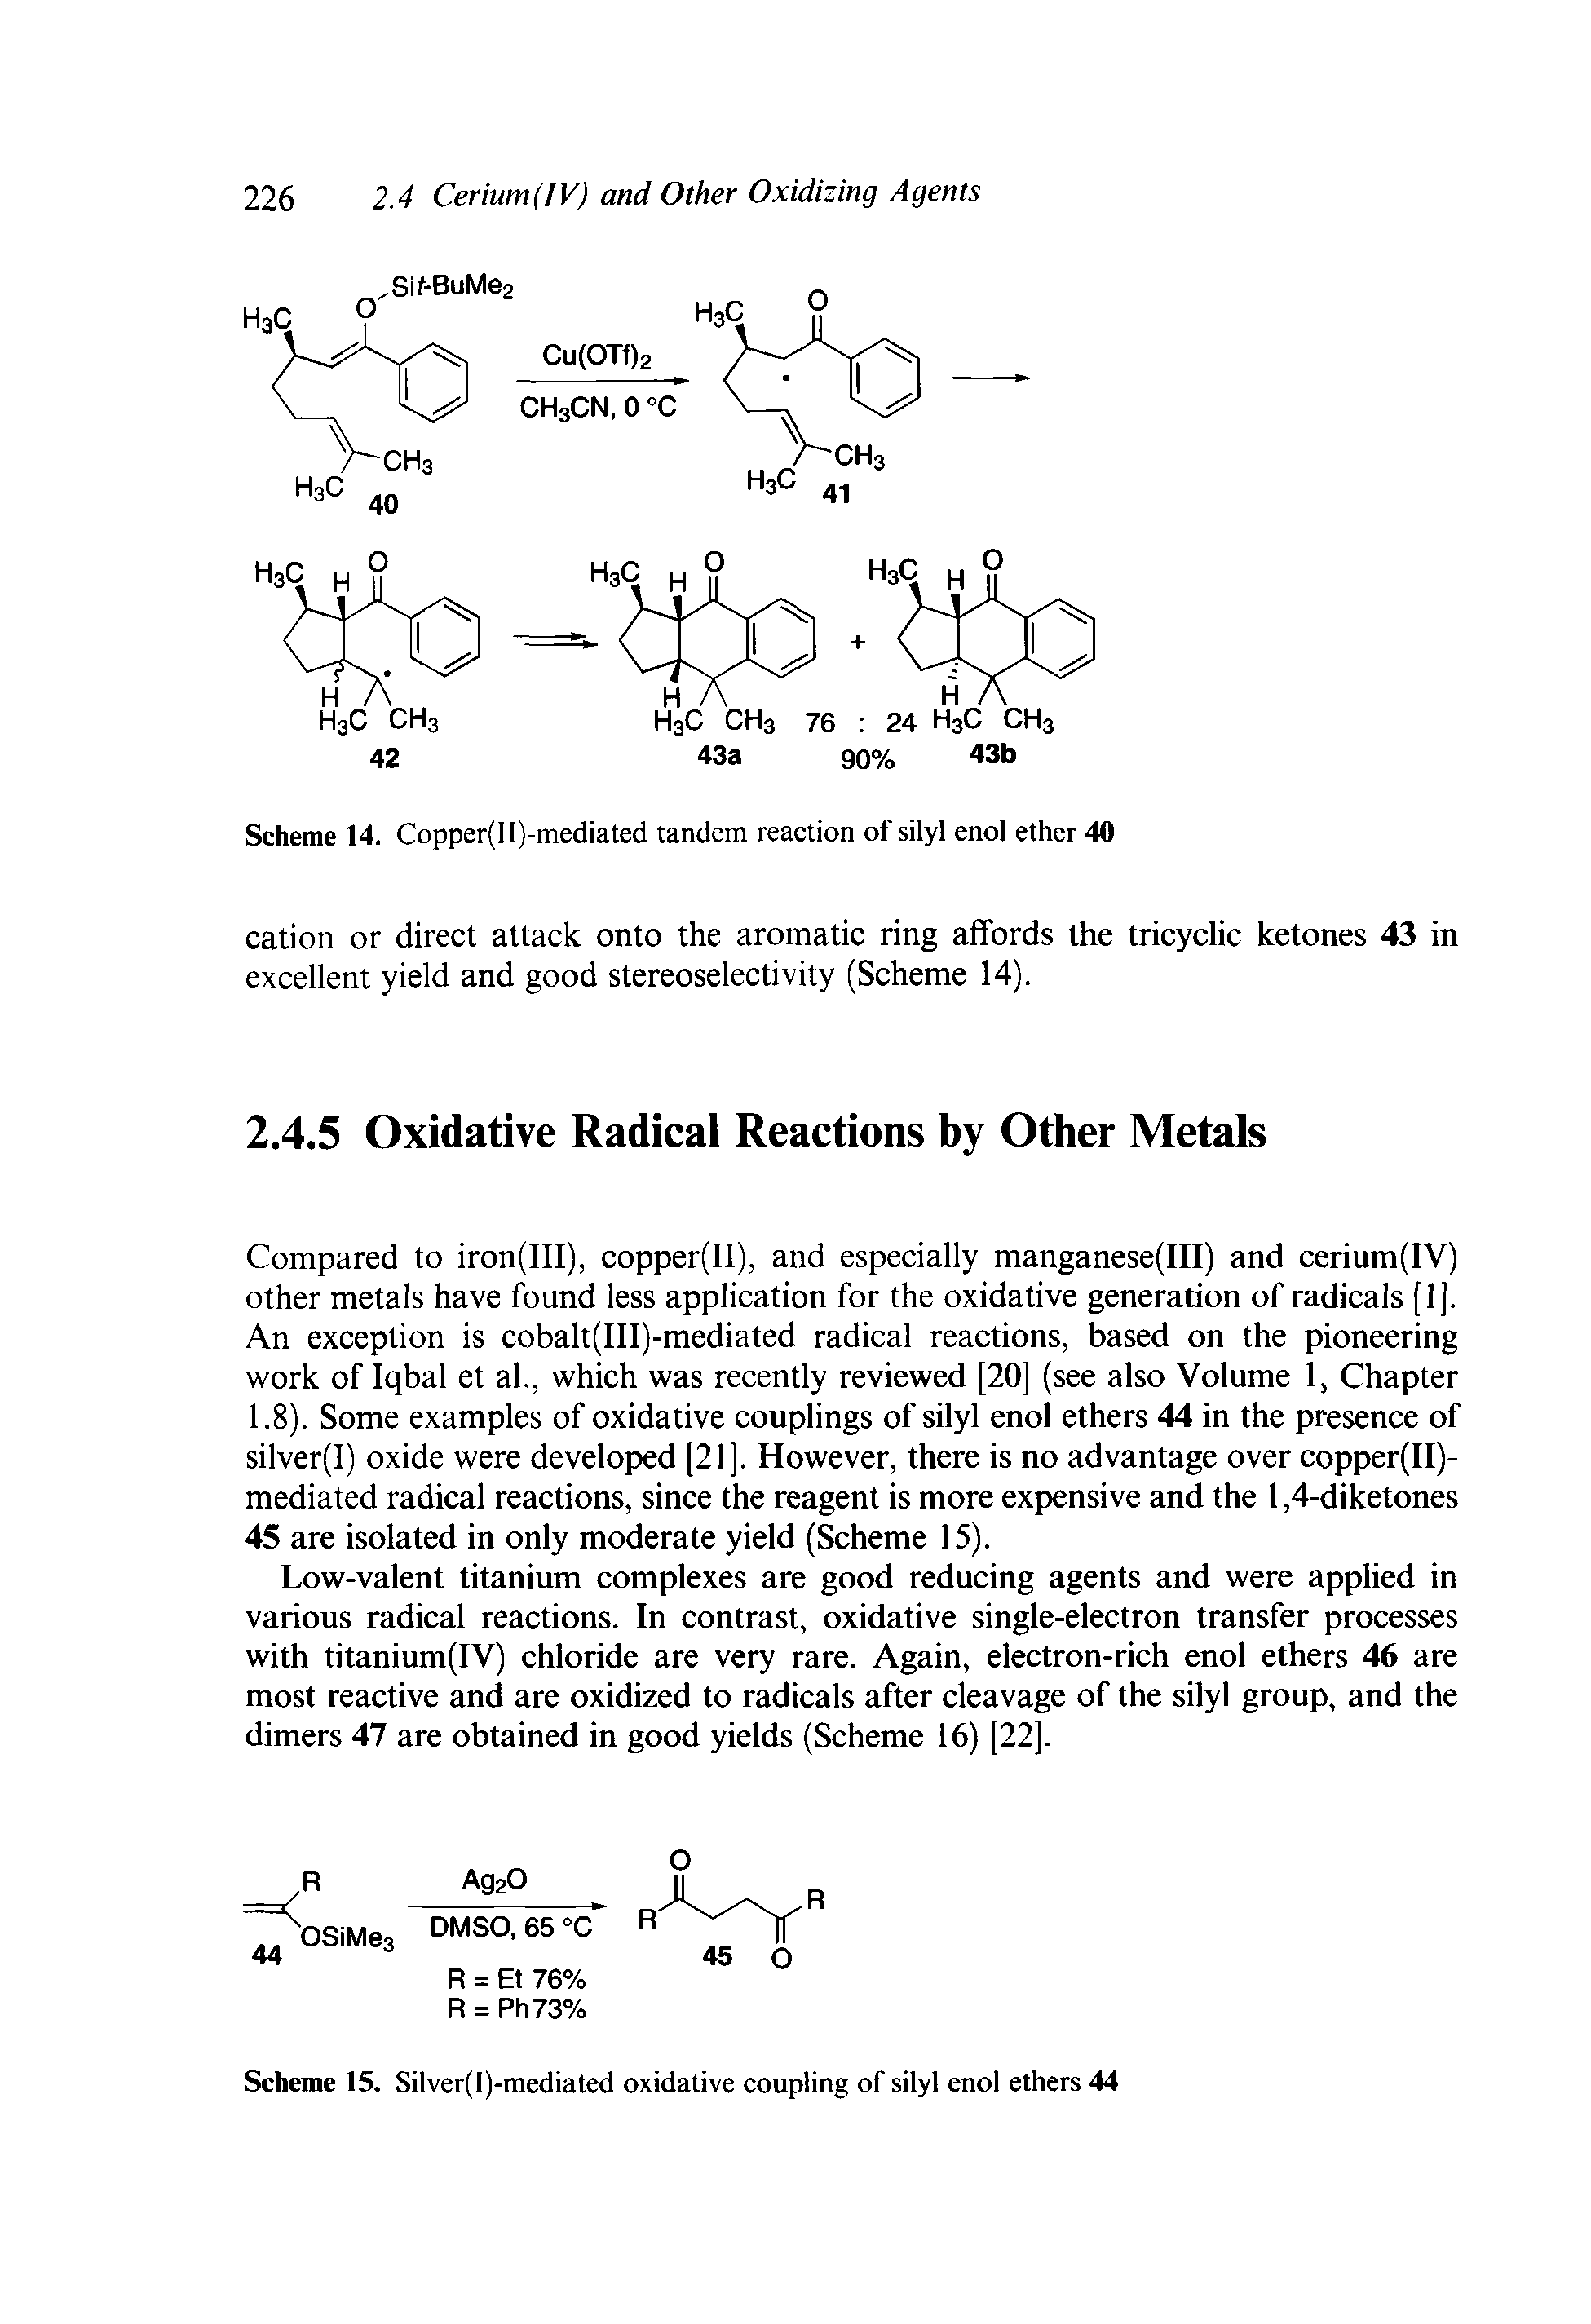 Scheme 15. Silver(l)-mediated oxidative coupling of silyl enol ethers 44...